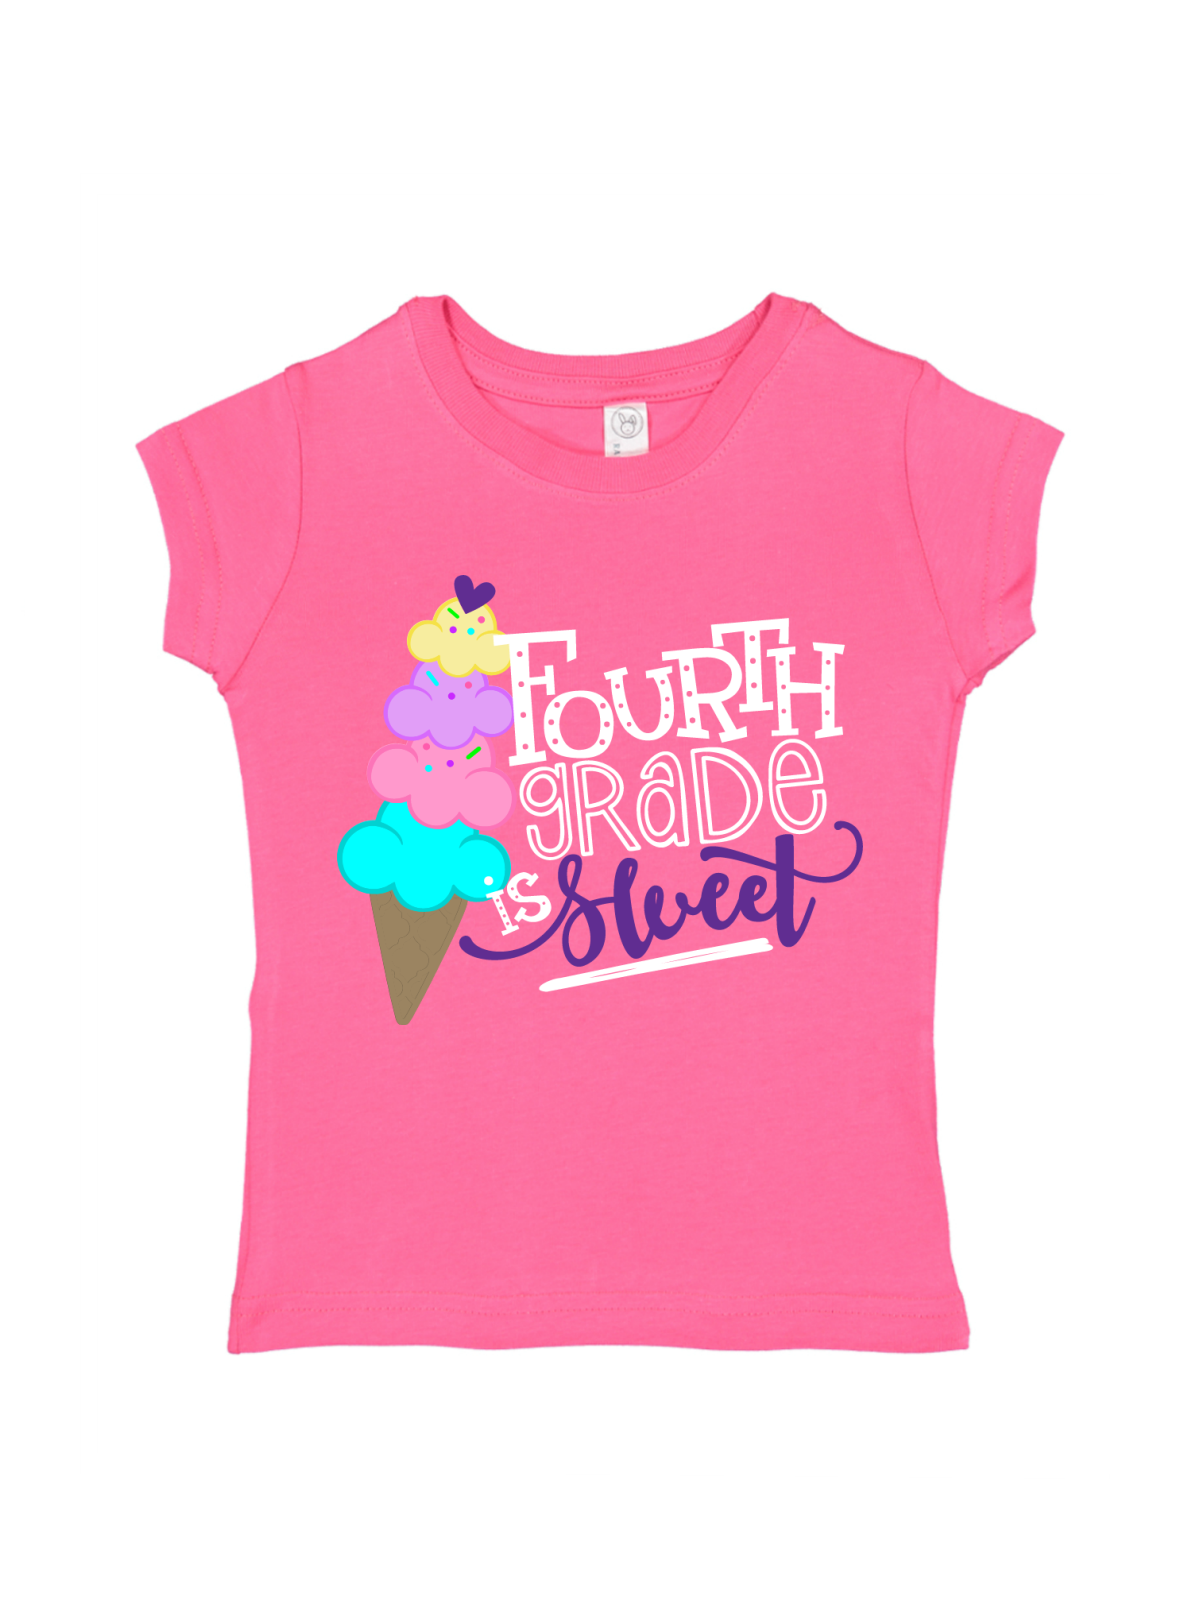 Fourth Grade is Sweet Girls Raspberry Pink Shirt